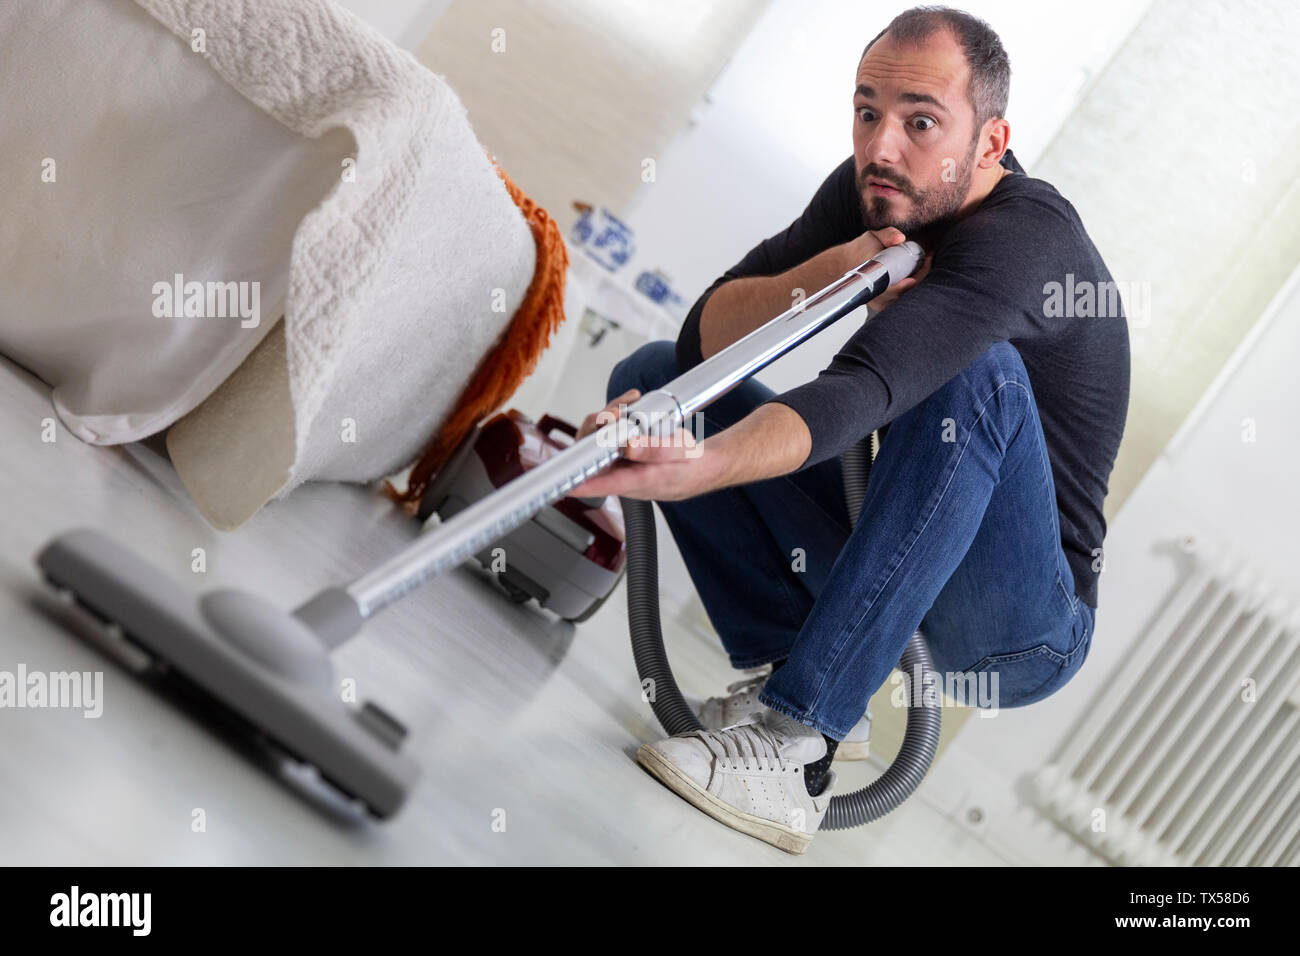 A man vacuuming. Stock Photo